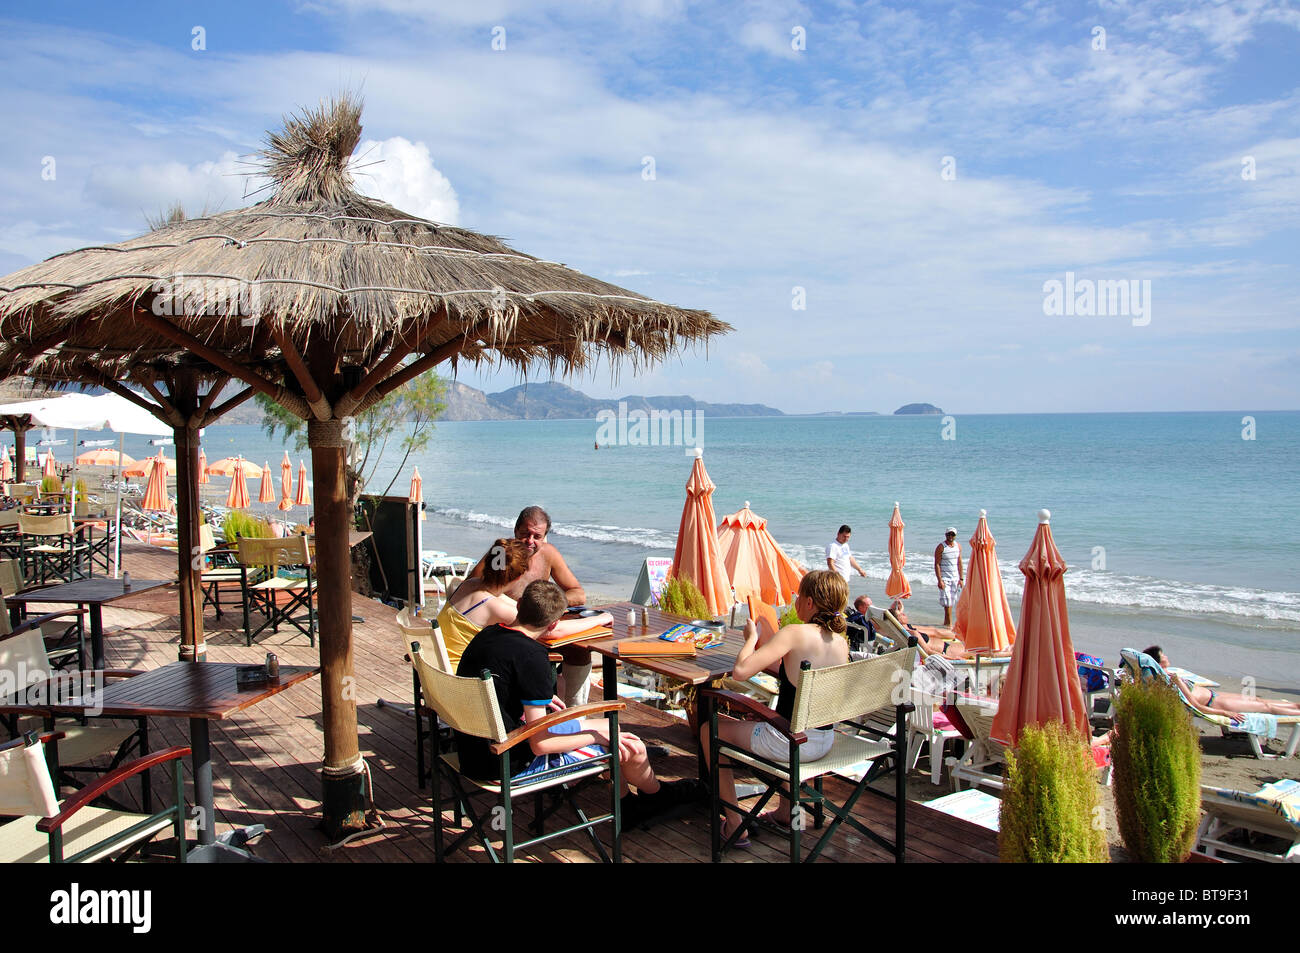 Beach Cafe, la plage de Laganas, Laganas, Zante, îles Ioniennes, Grèce Banque D'Images